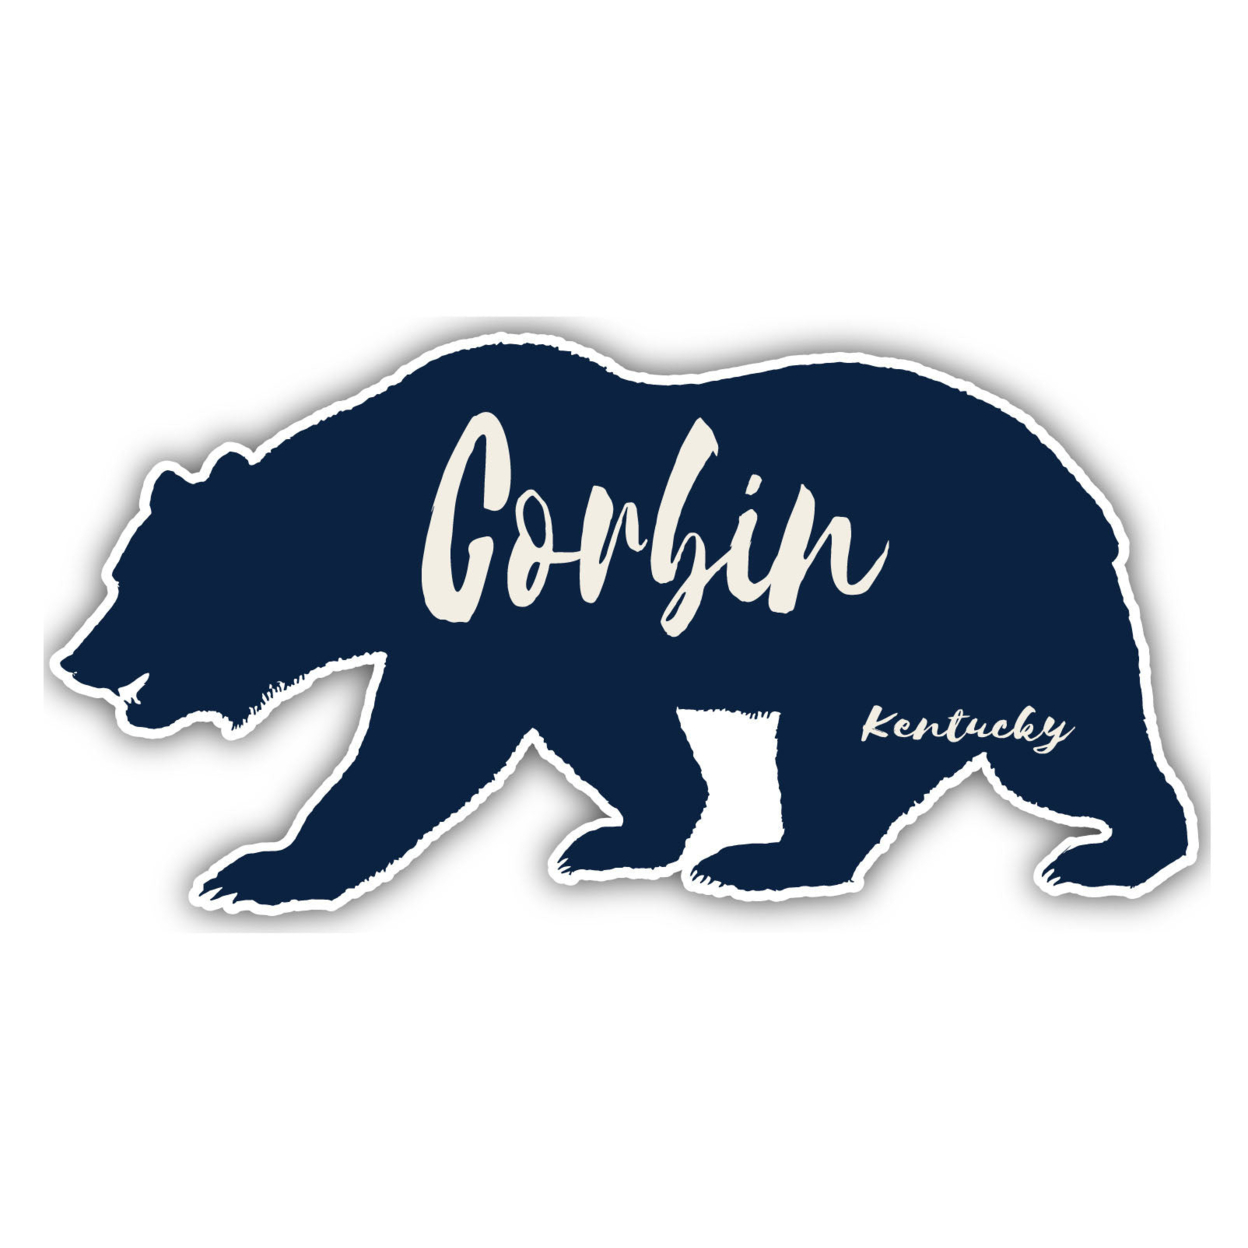 Corbin Kentucky Souvenir Decorative Stickers (Choose Theme And Size) - Single Unit, 8-Inch, Bear